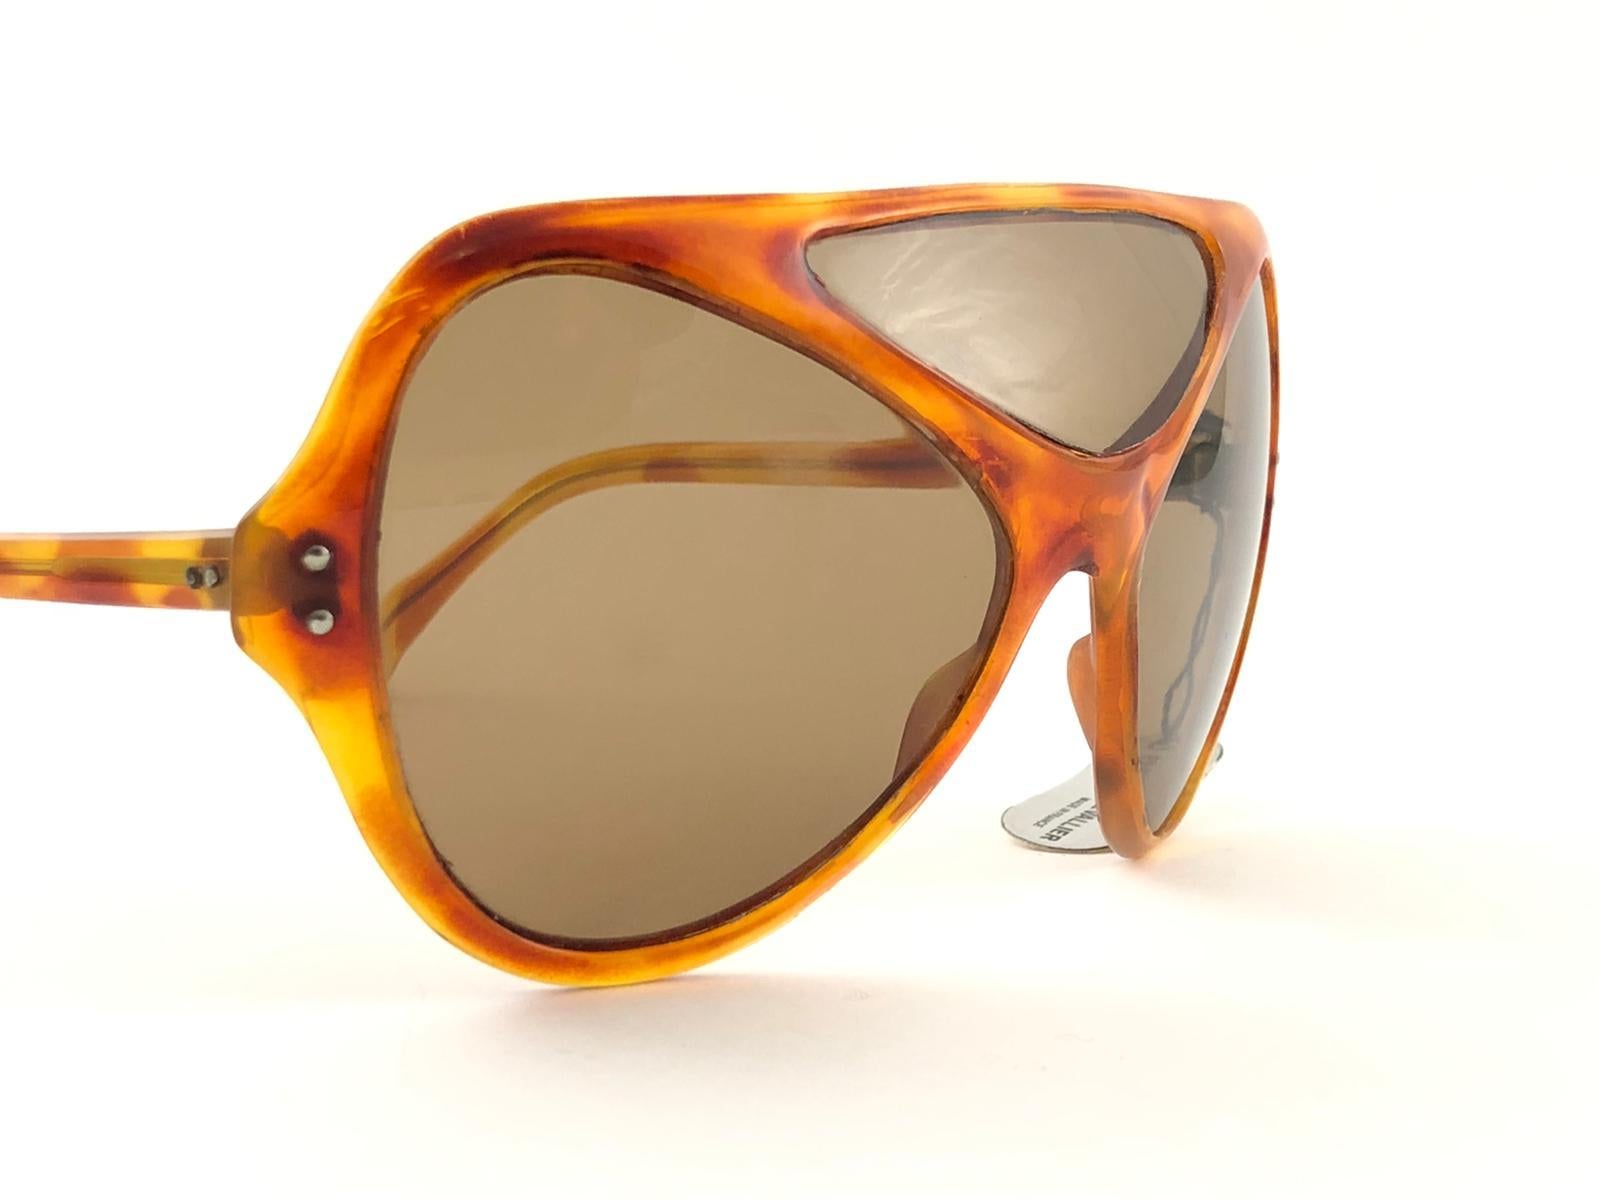 New Vintage Philippe Chevallier III Light Tortoise Miles Davis 1960 Sunglasses For Sale 1